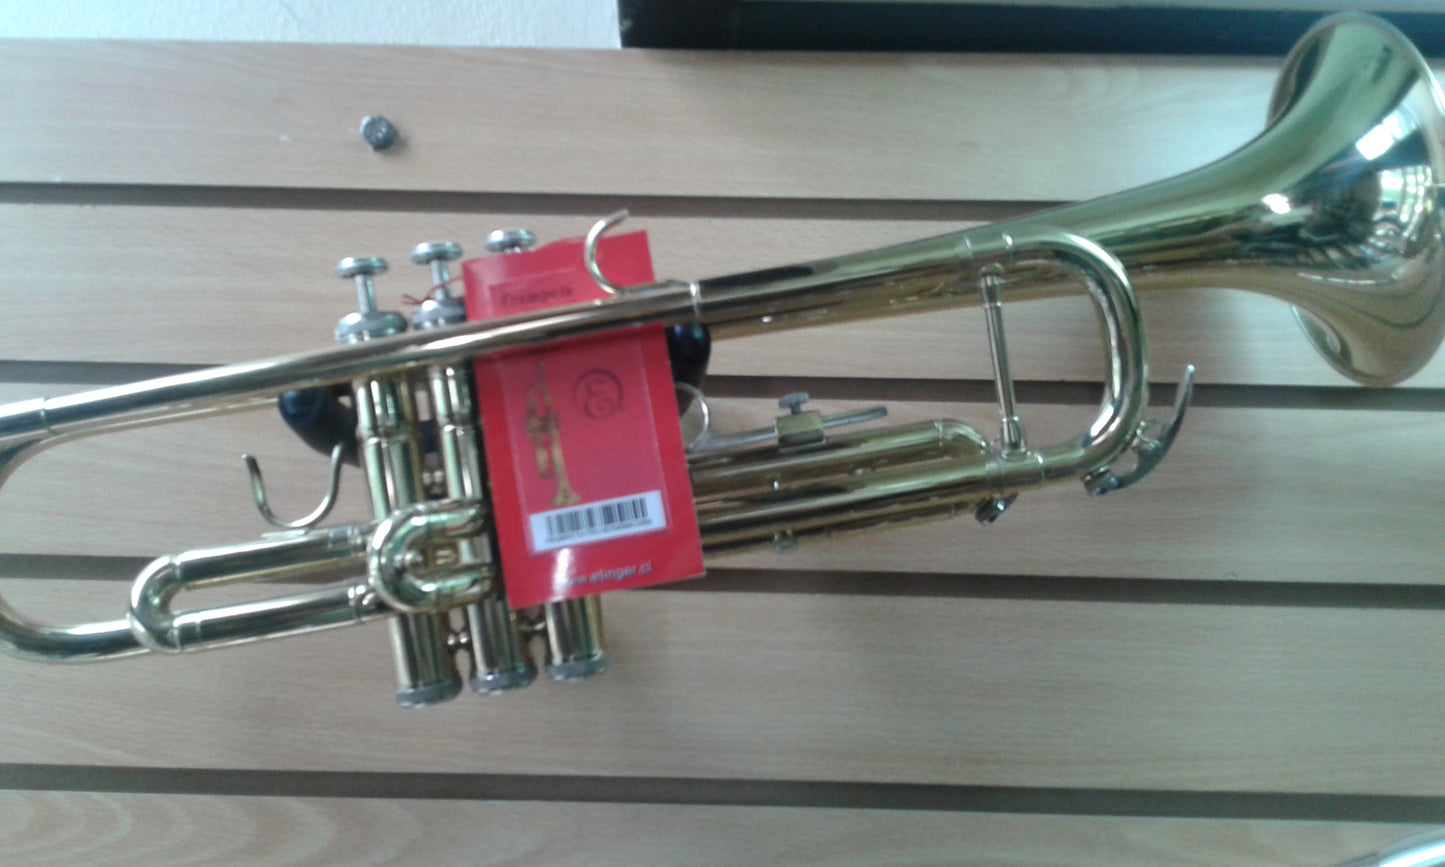 Trompeta Etinger Mod. TR-82/80  ¡Comienza tu Viaje Musical!